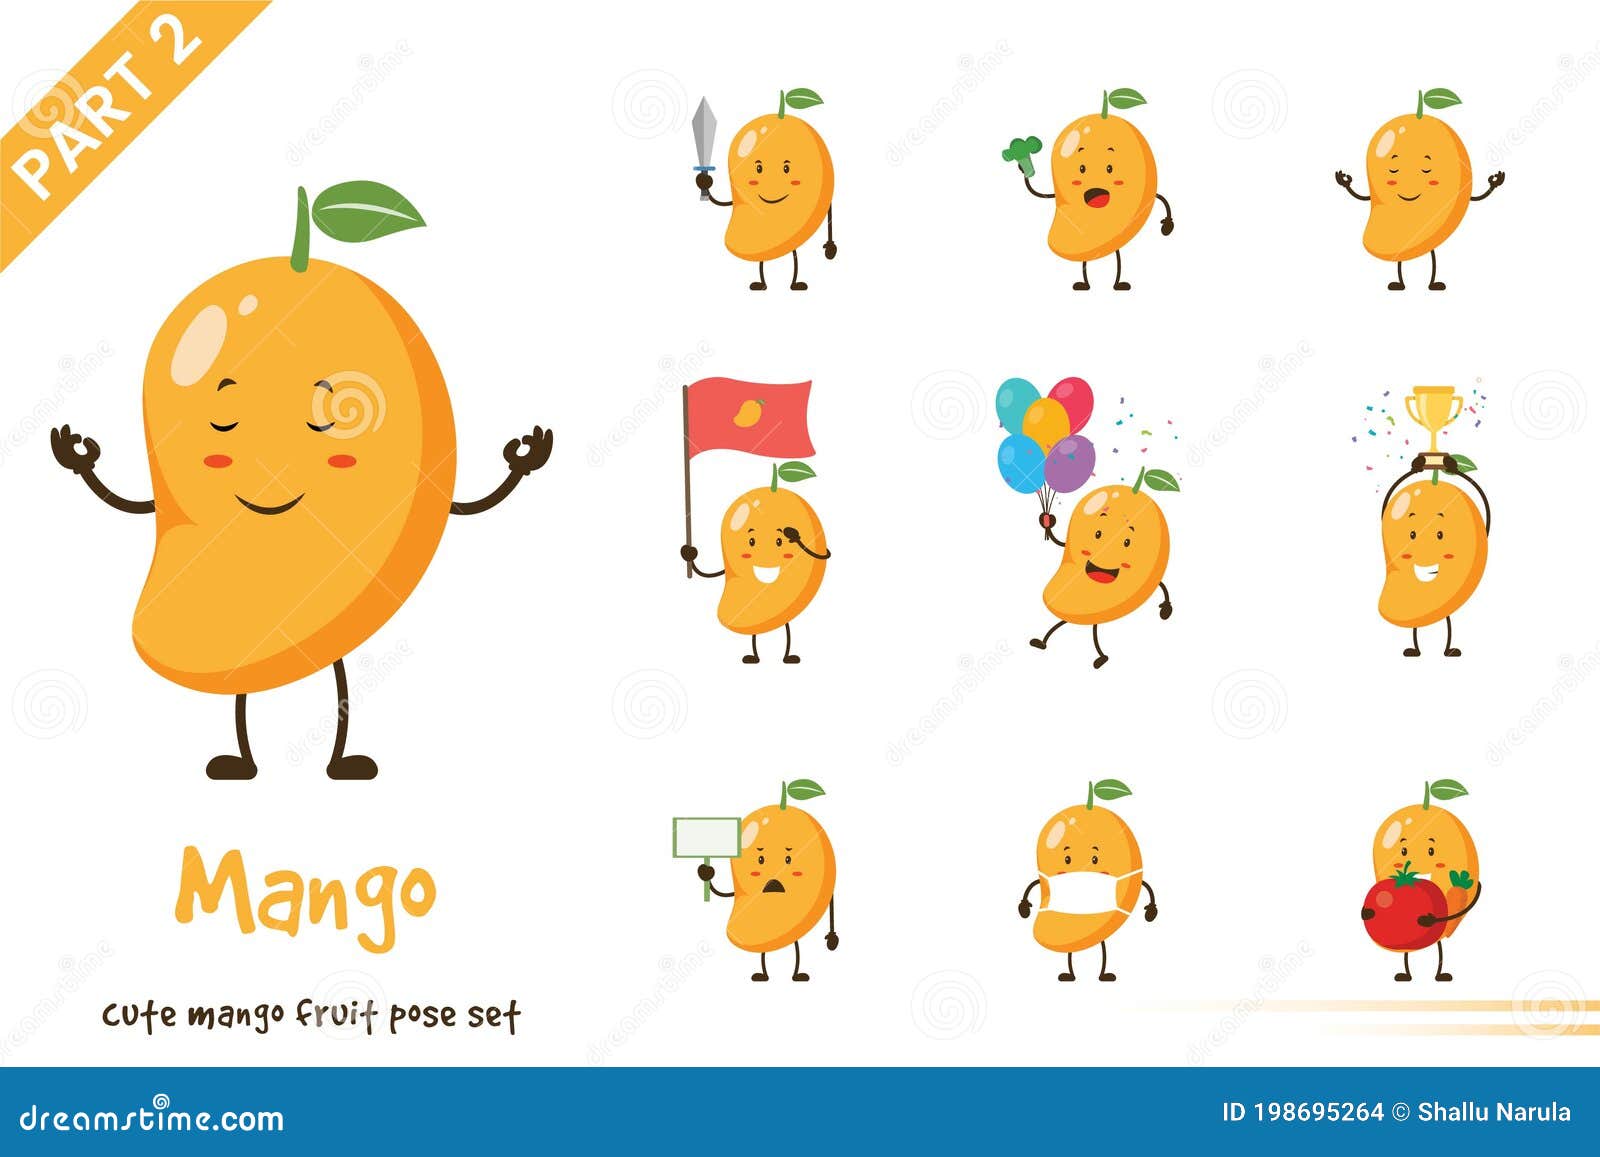 9 Mango Pickle Stock Illustrations, Vectors & Clipart - Dreamstime